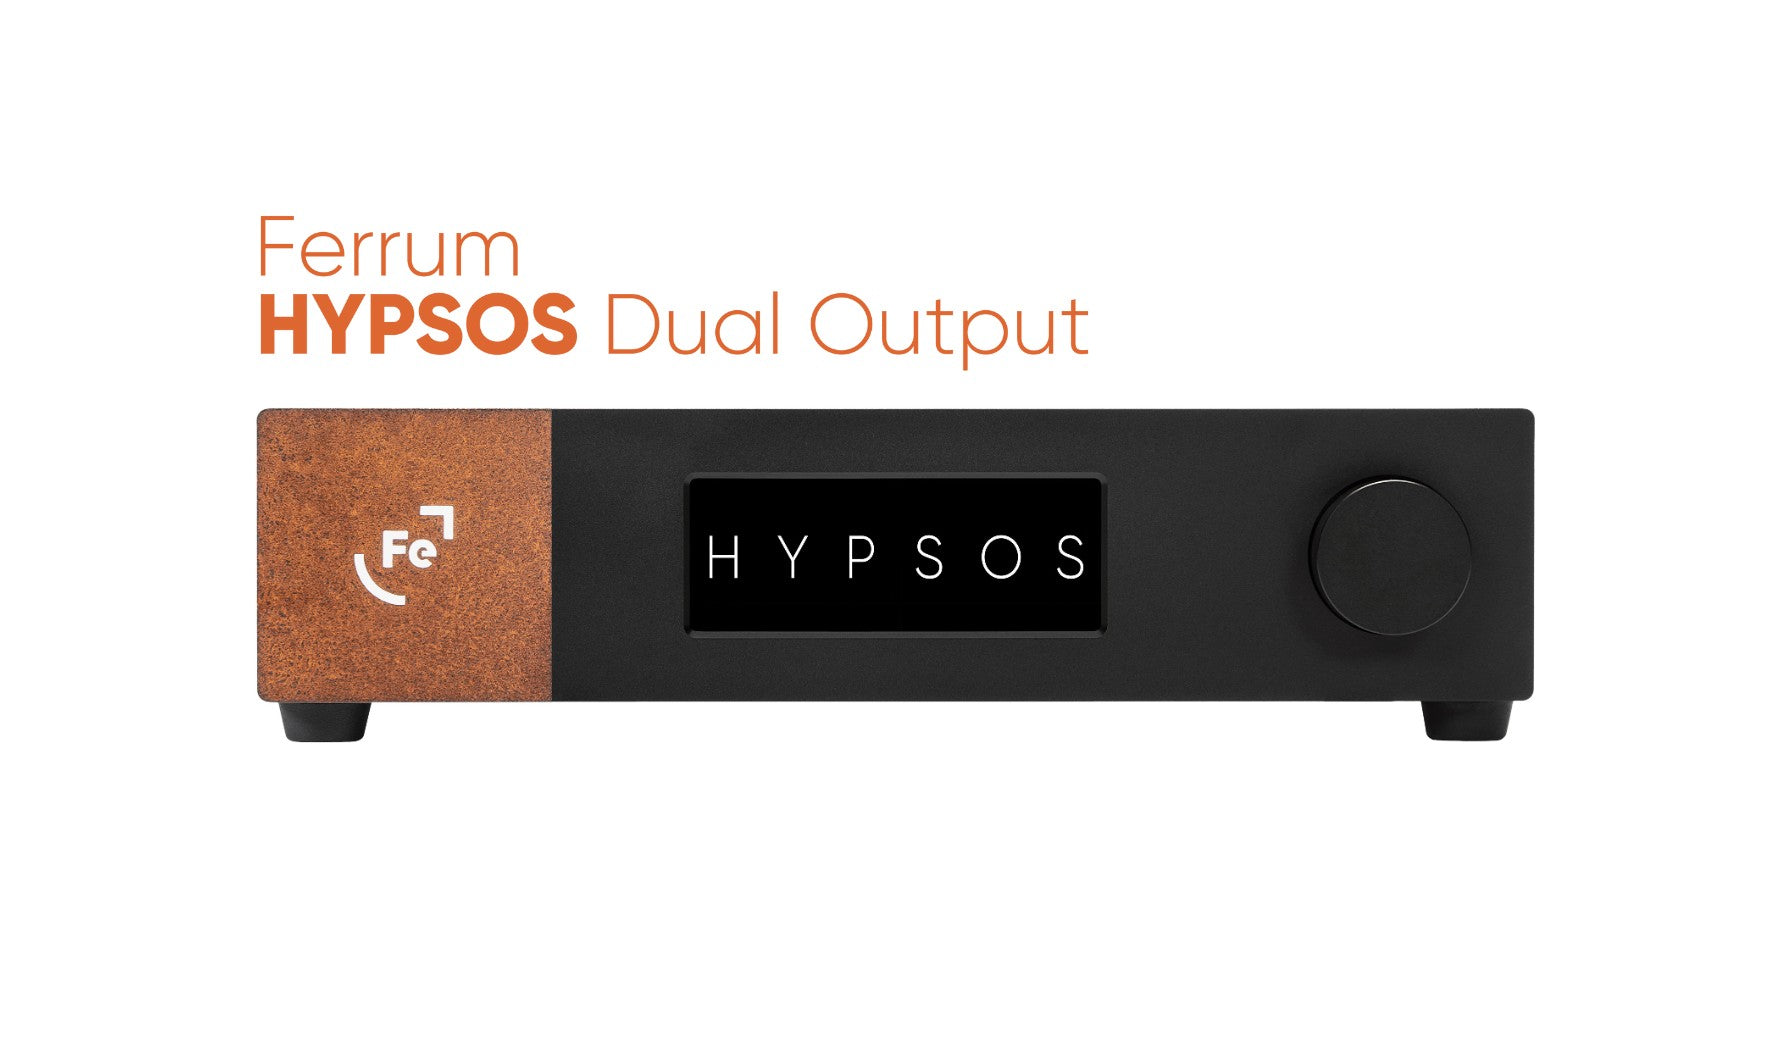 Ferrum Hypsos Dual Output